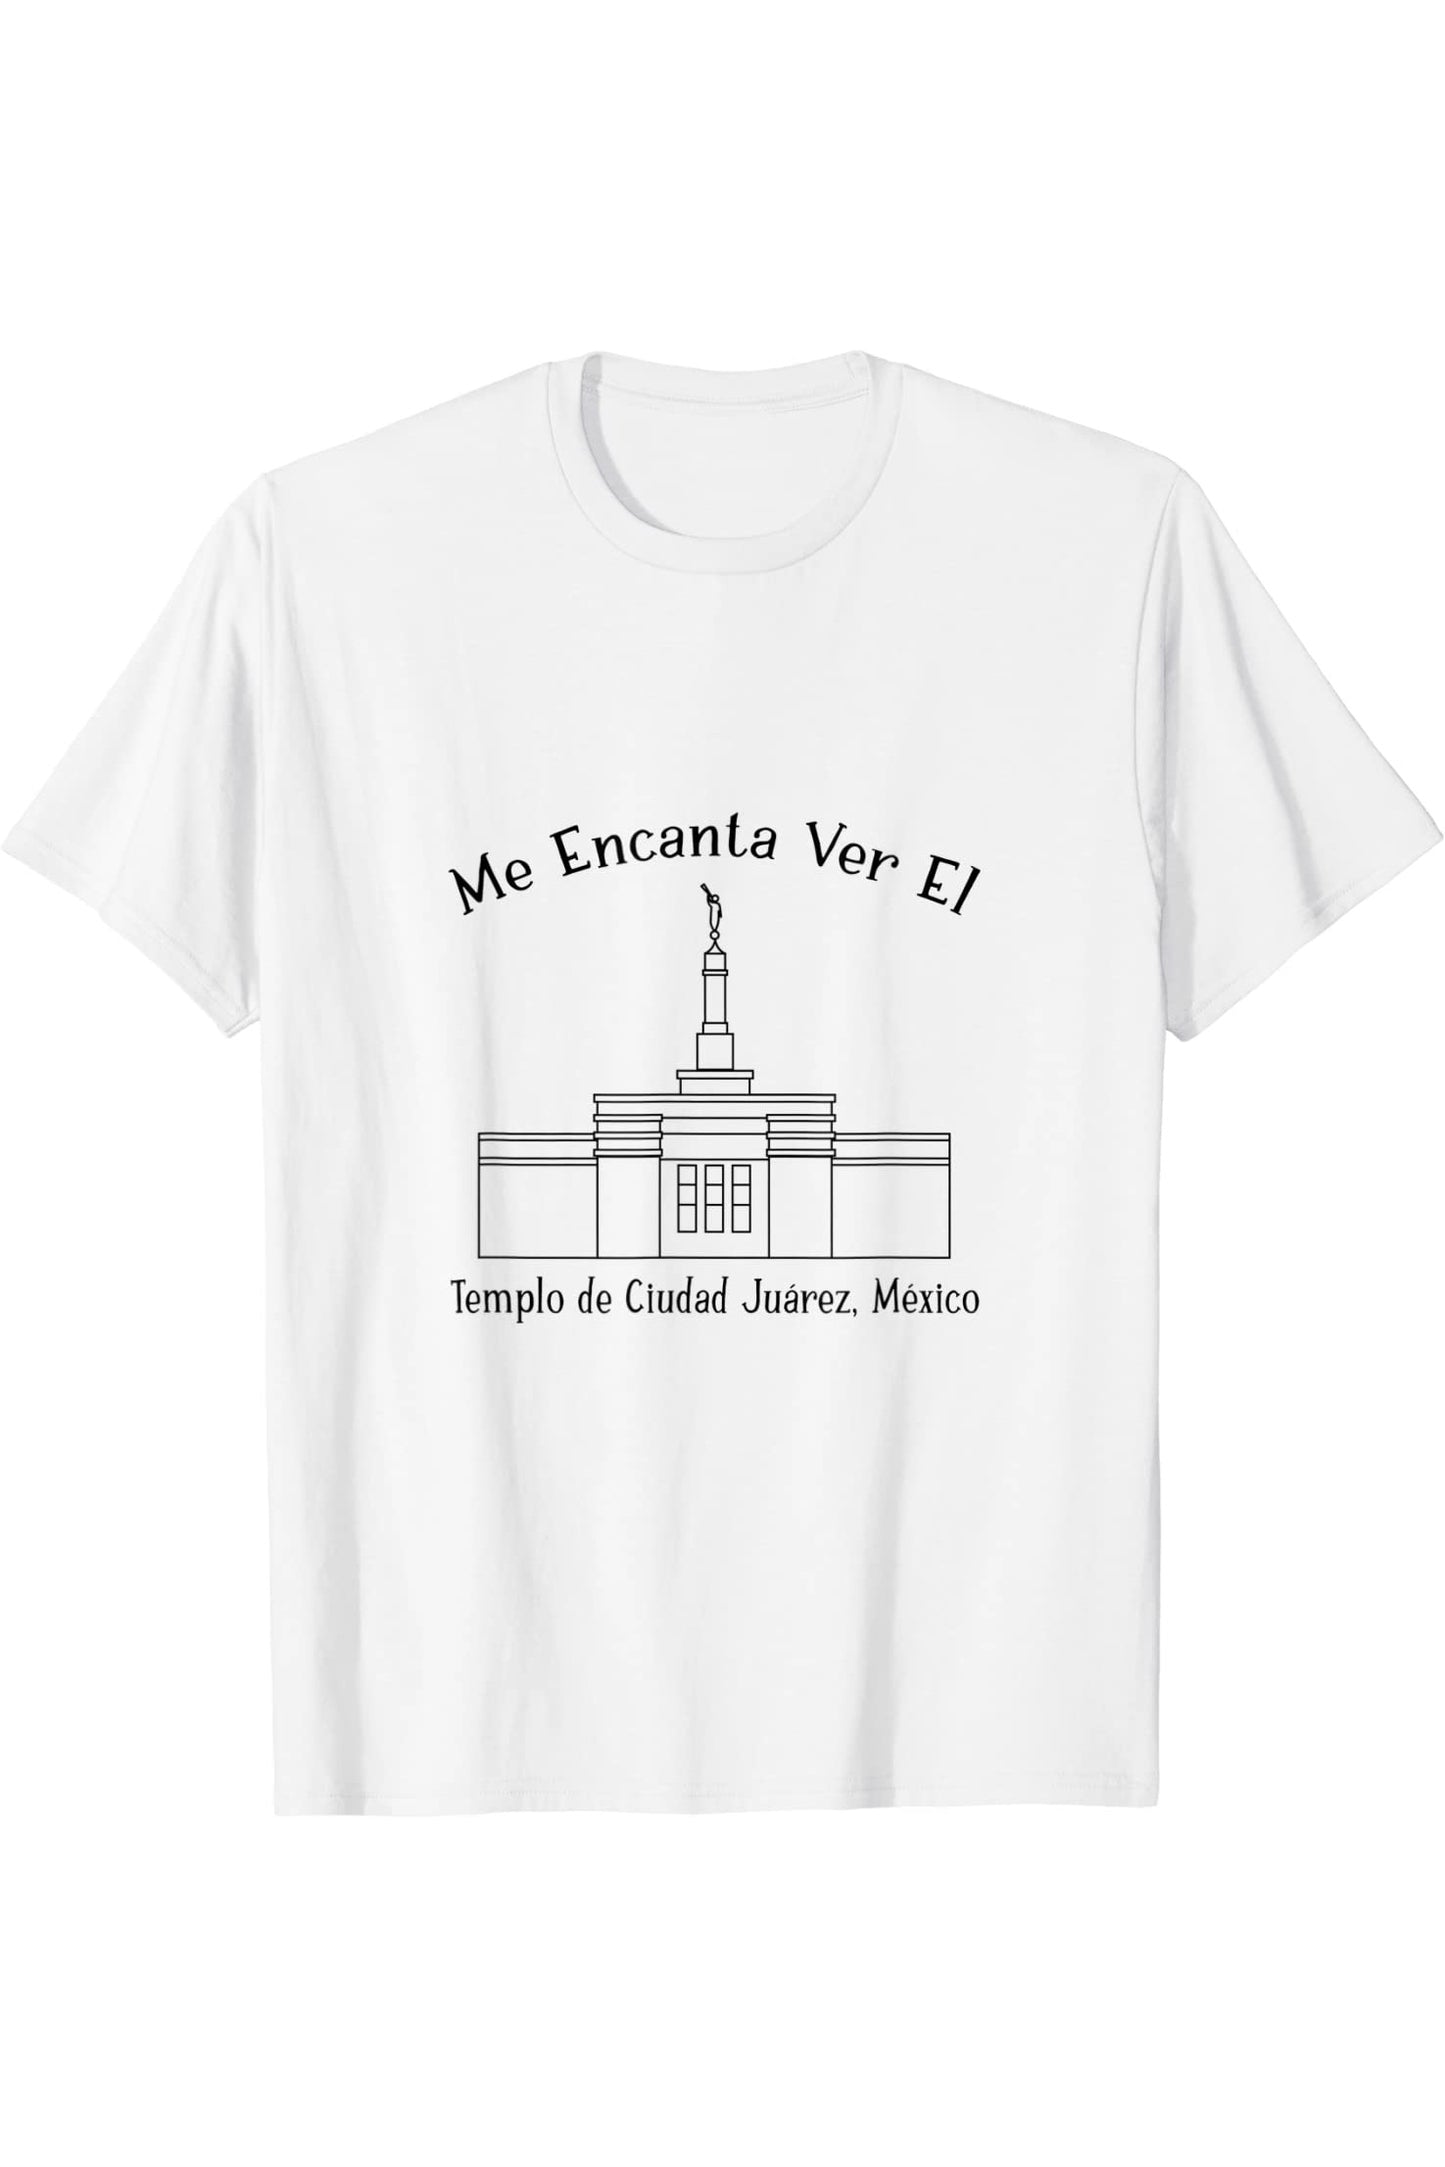 Ciudad Juarez Mexico Temple T-Shirt - Happy Style (Spanish) US